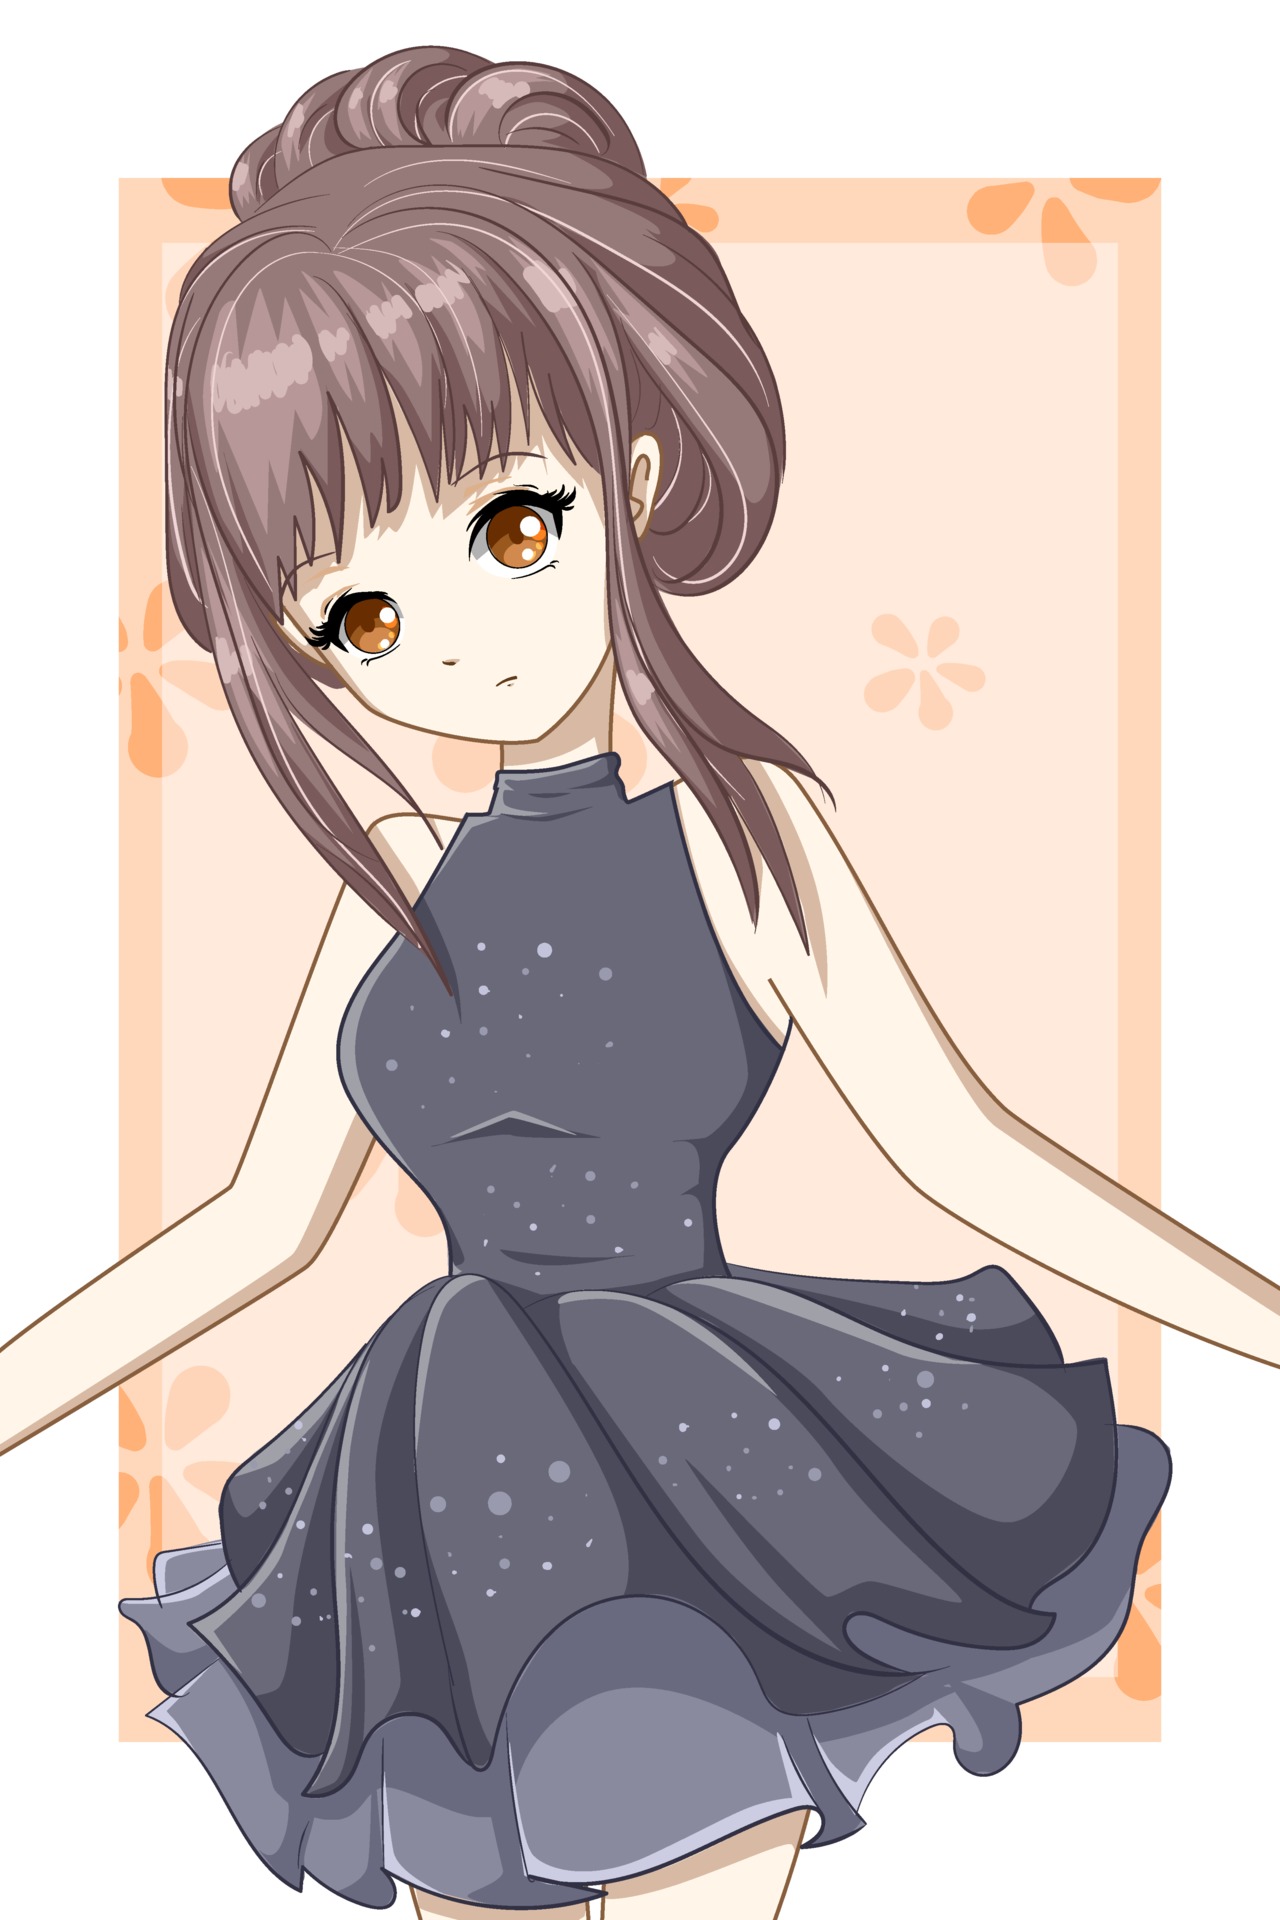 Anime Dress Images - Free Download on Freepik